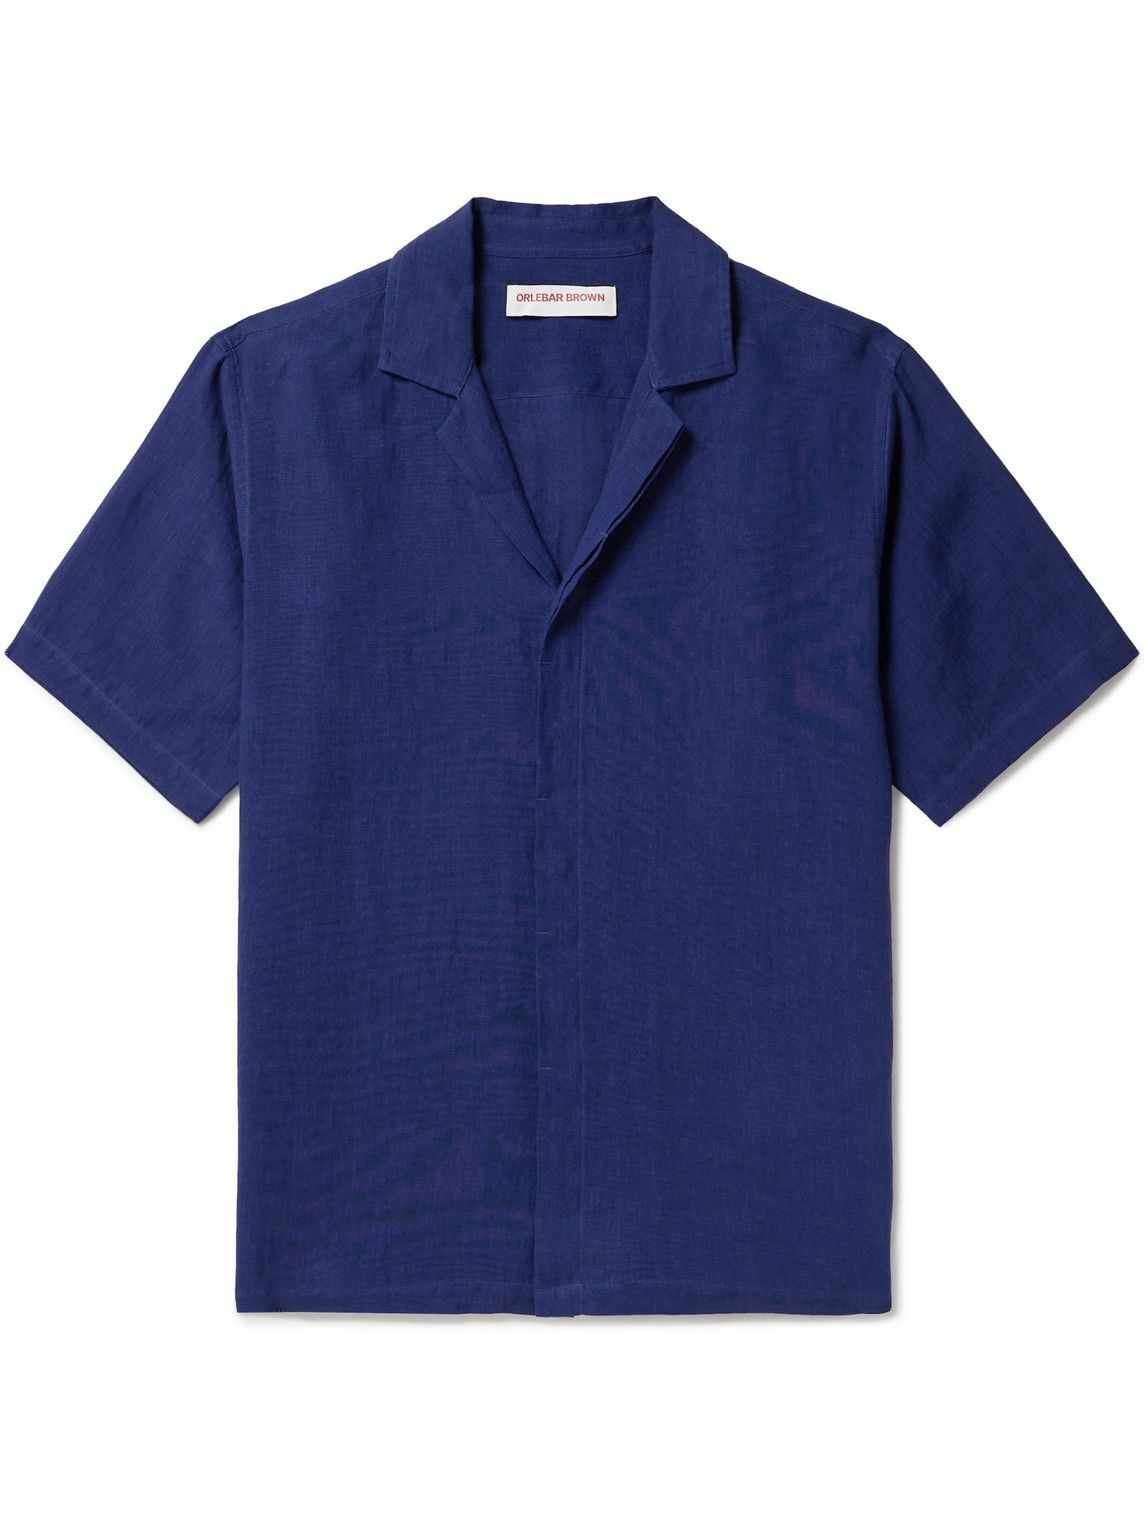 Hibbert Jacquard Denim Shirt in Blue - Orlebar Brown